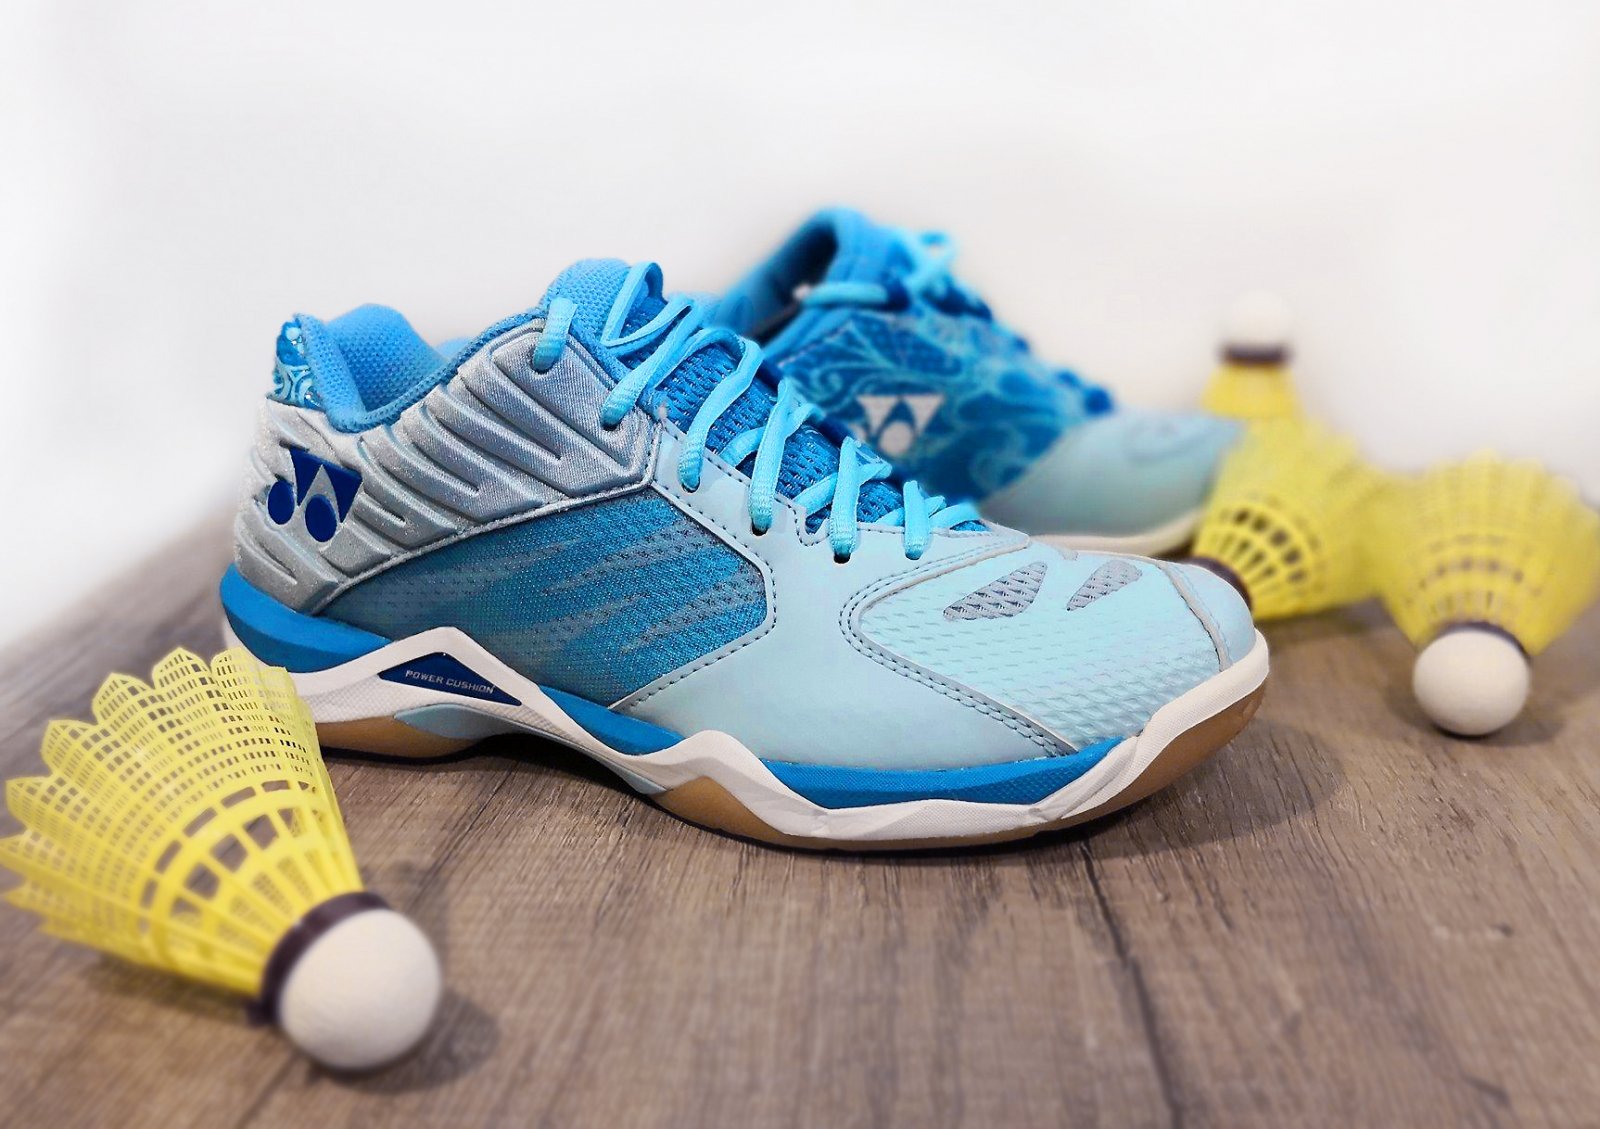 Nowe modele butów do badmintona na sezon 2018